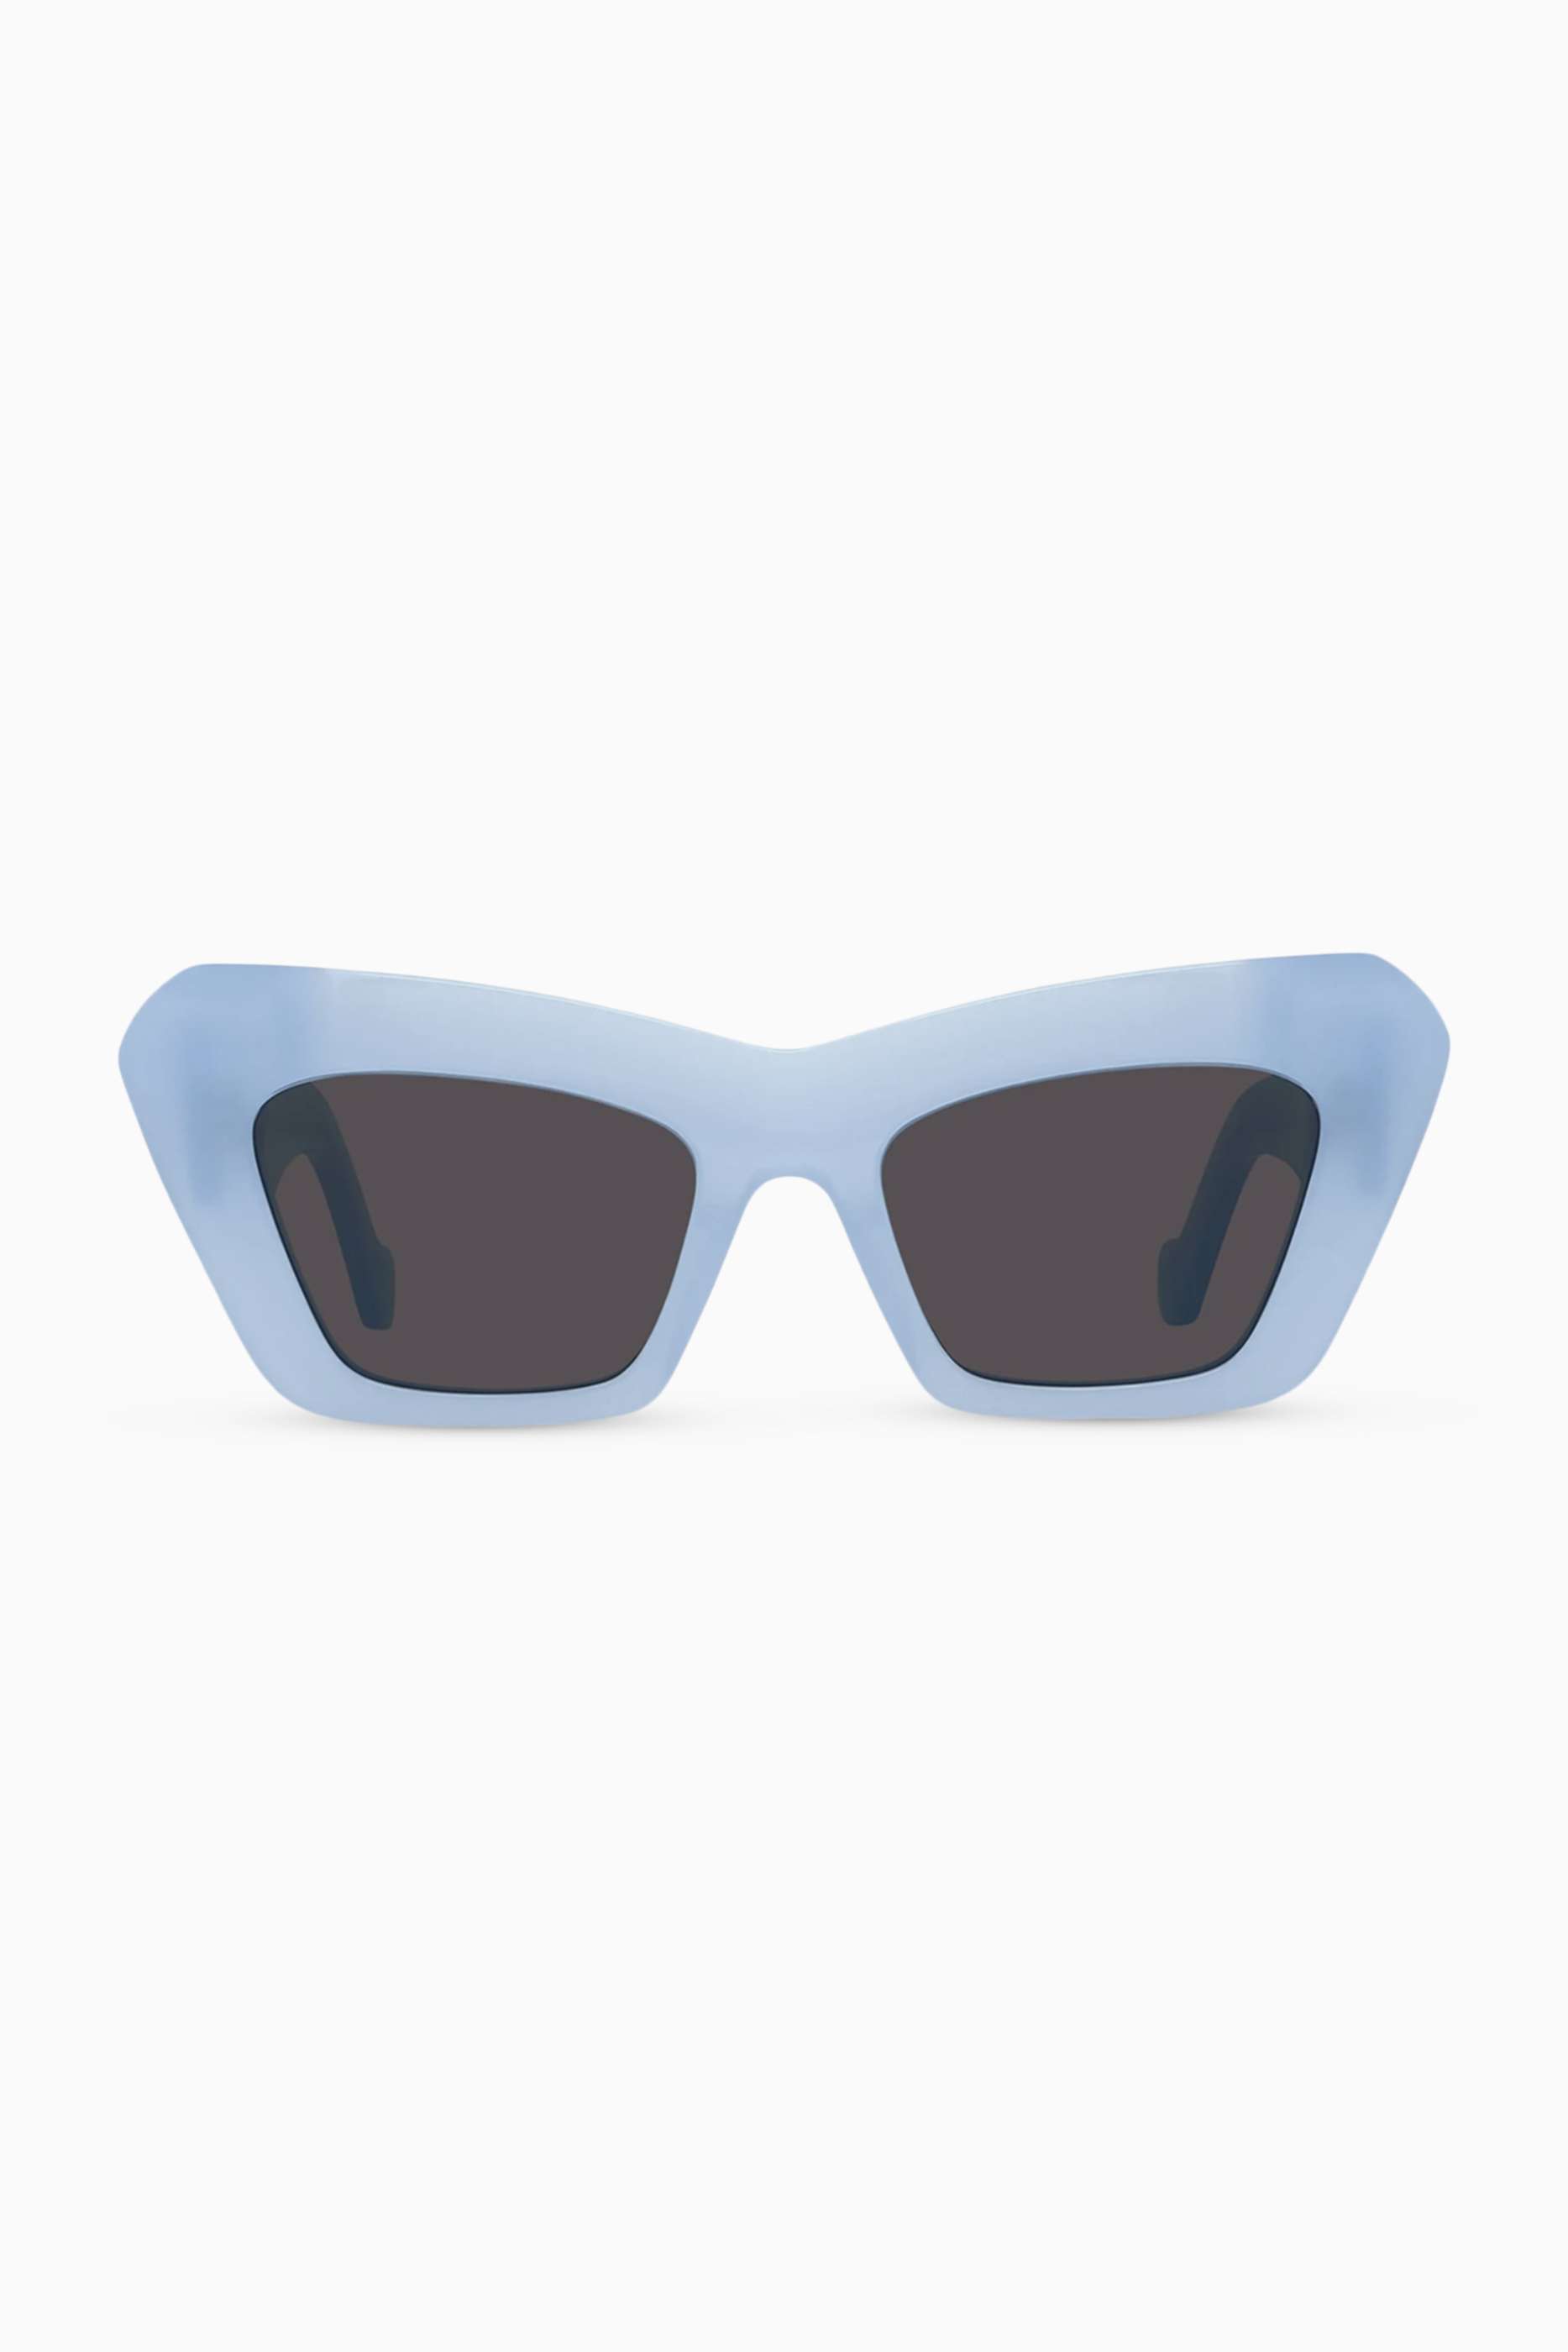 shop-loewe-cat-eye-sunglasses-in-acetate-for-women